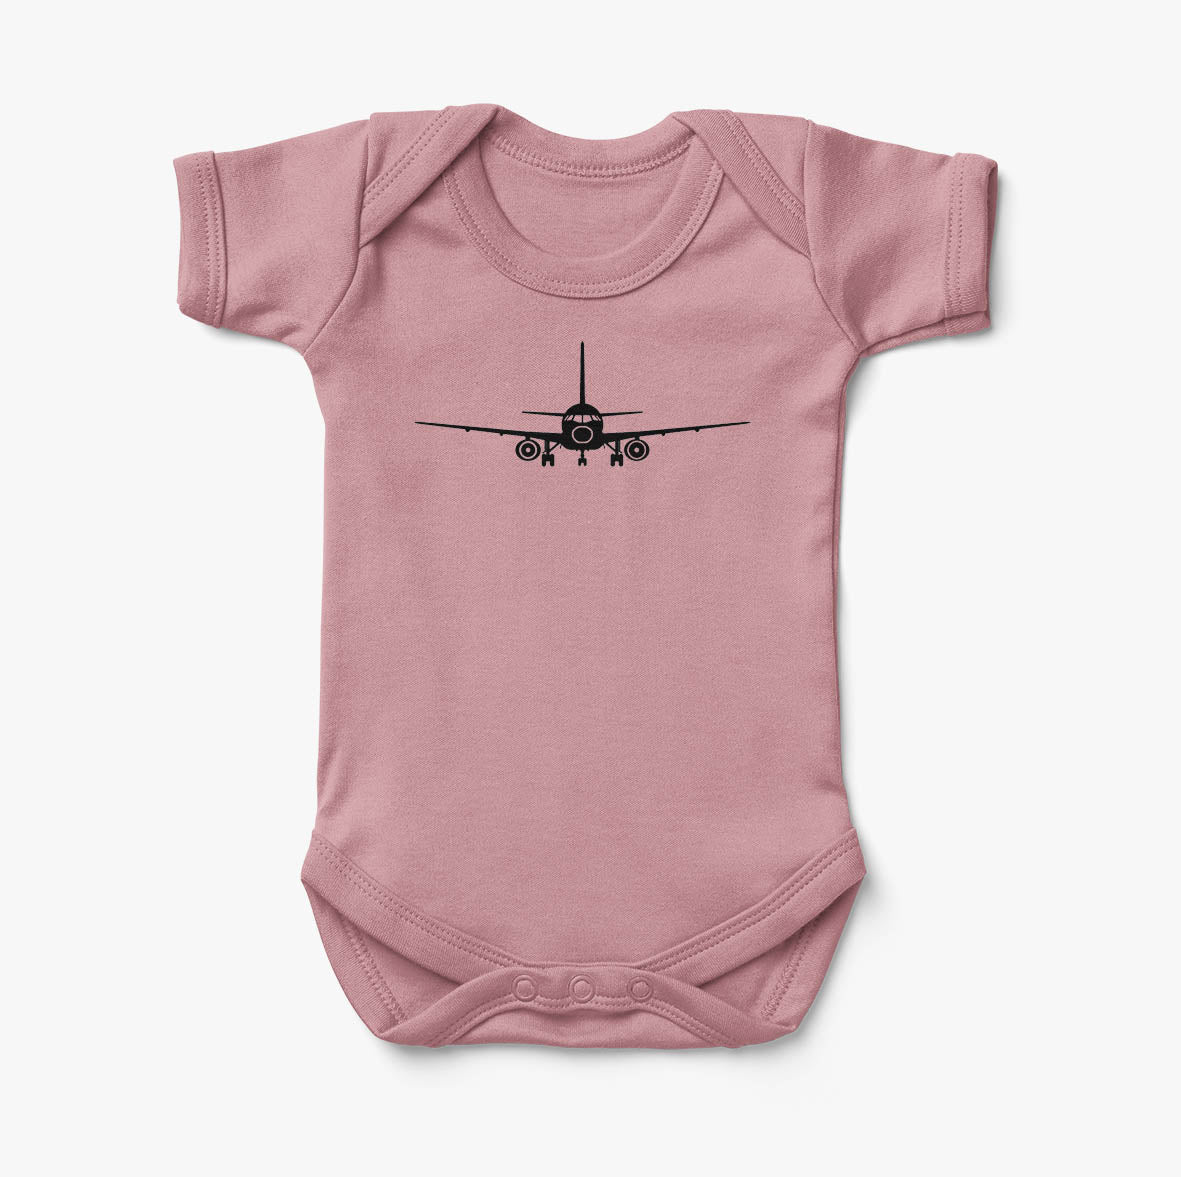 Sukhoi Superjet 100 Silhouette Designed Baby Bodysuits